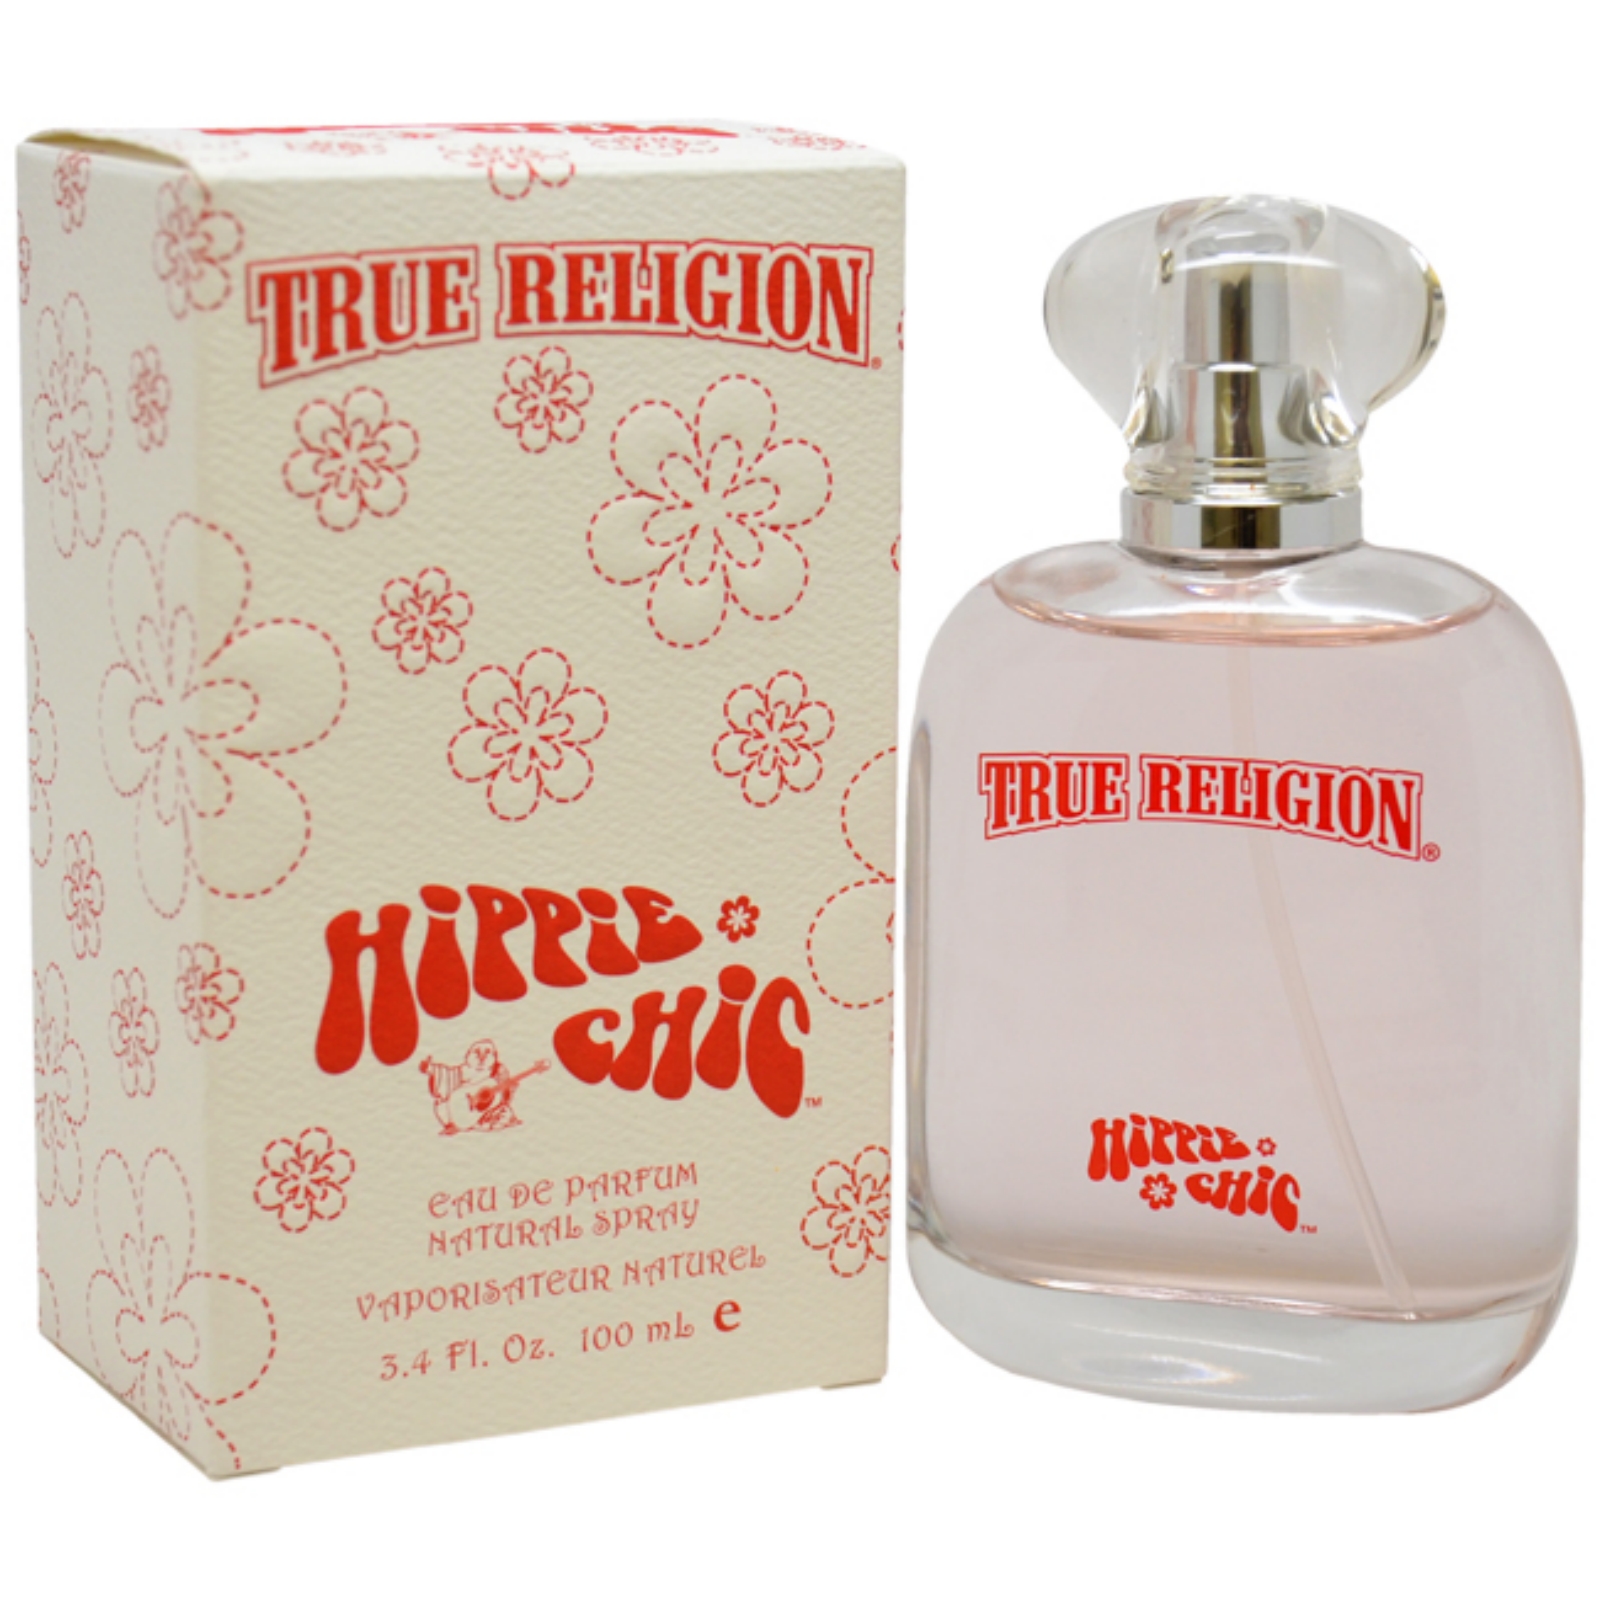 True Religion Hippie Chic by  Brand Jeans for Women - 3.4 oz EDP Spray